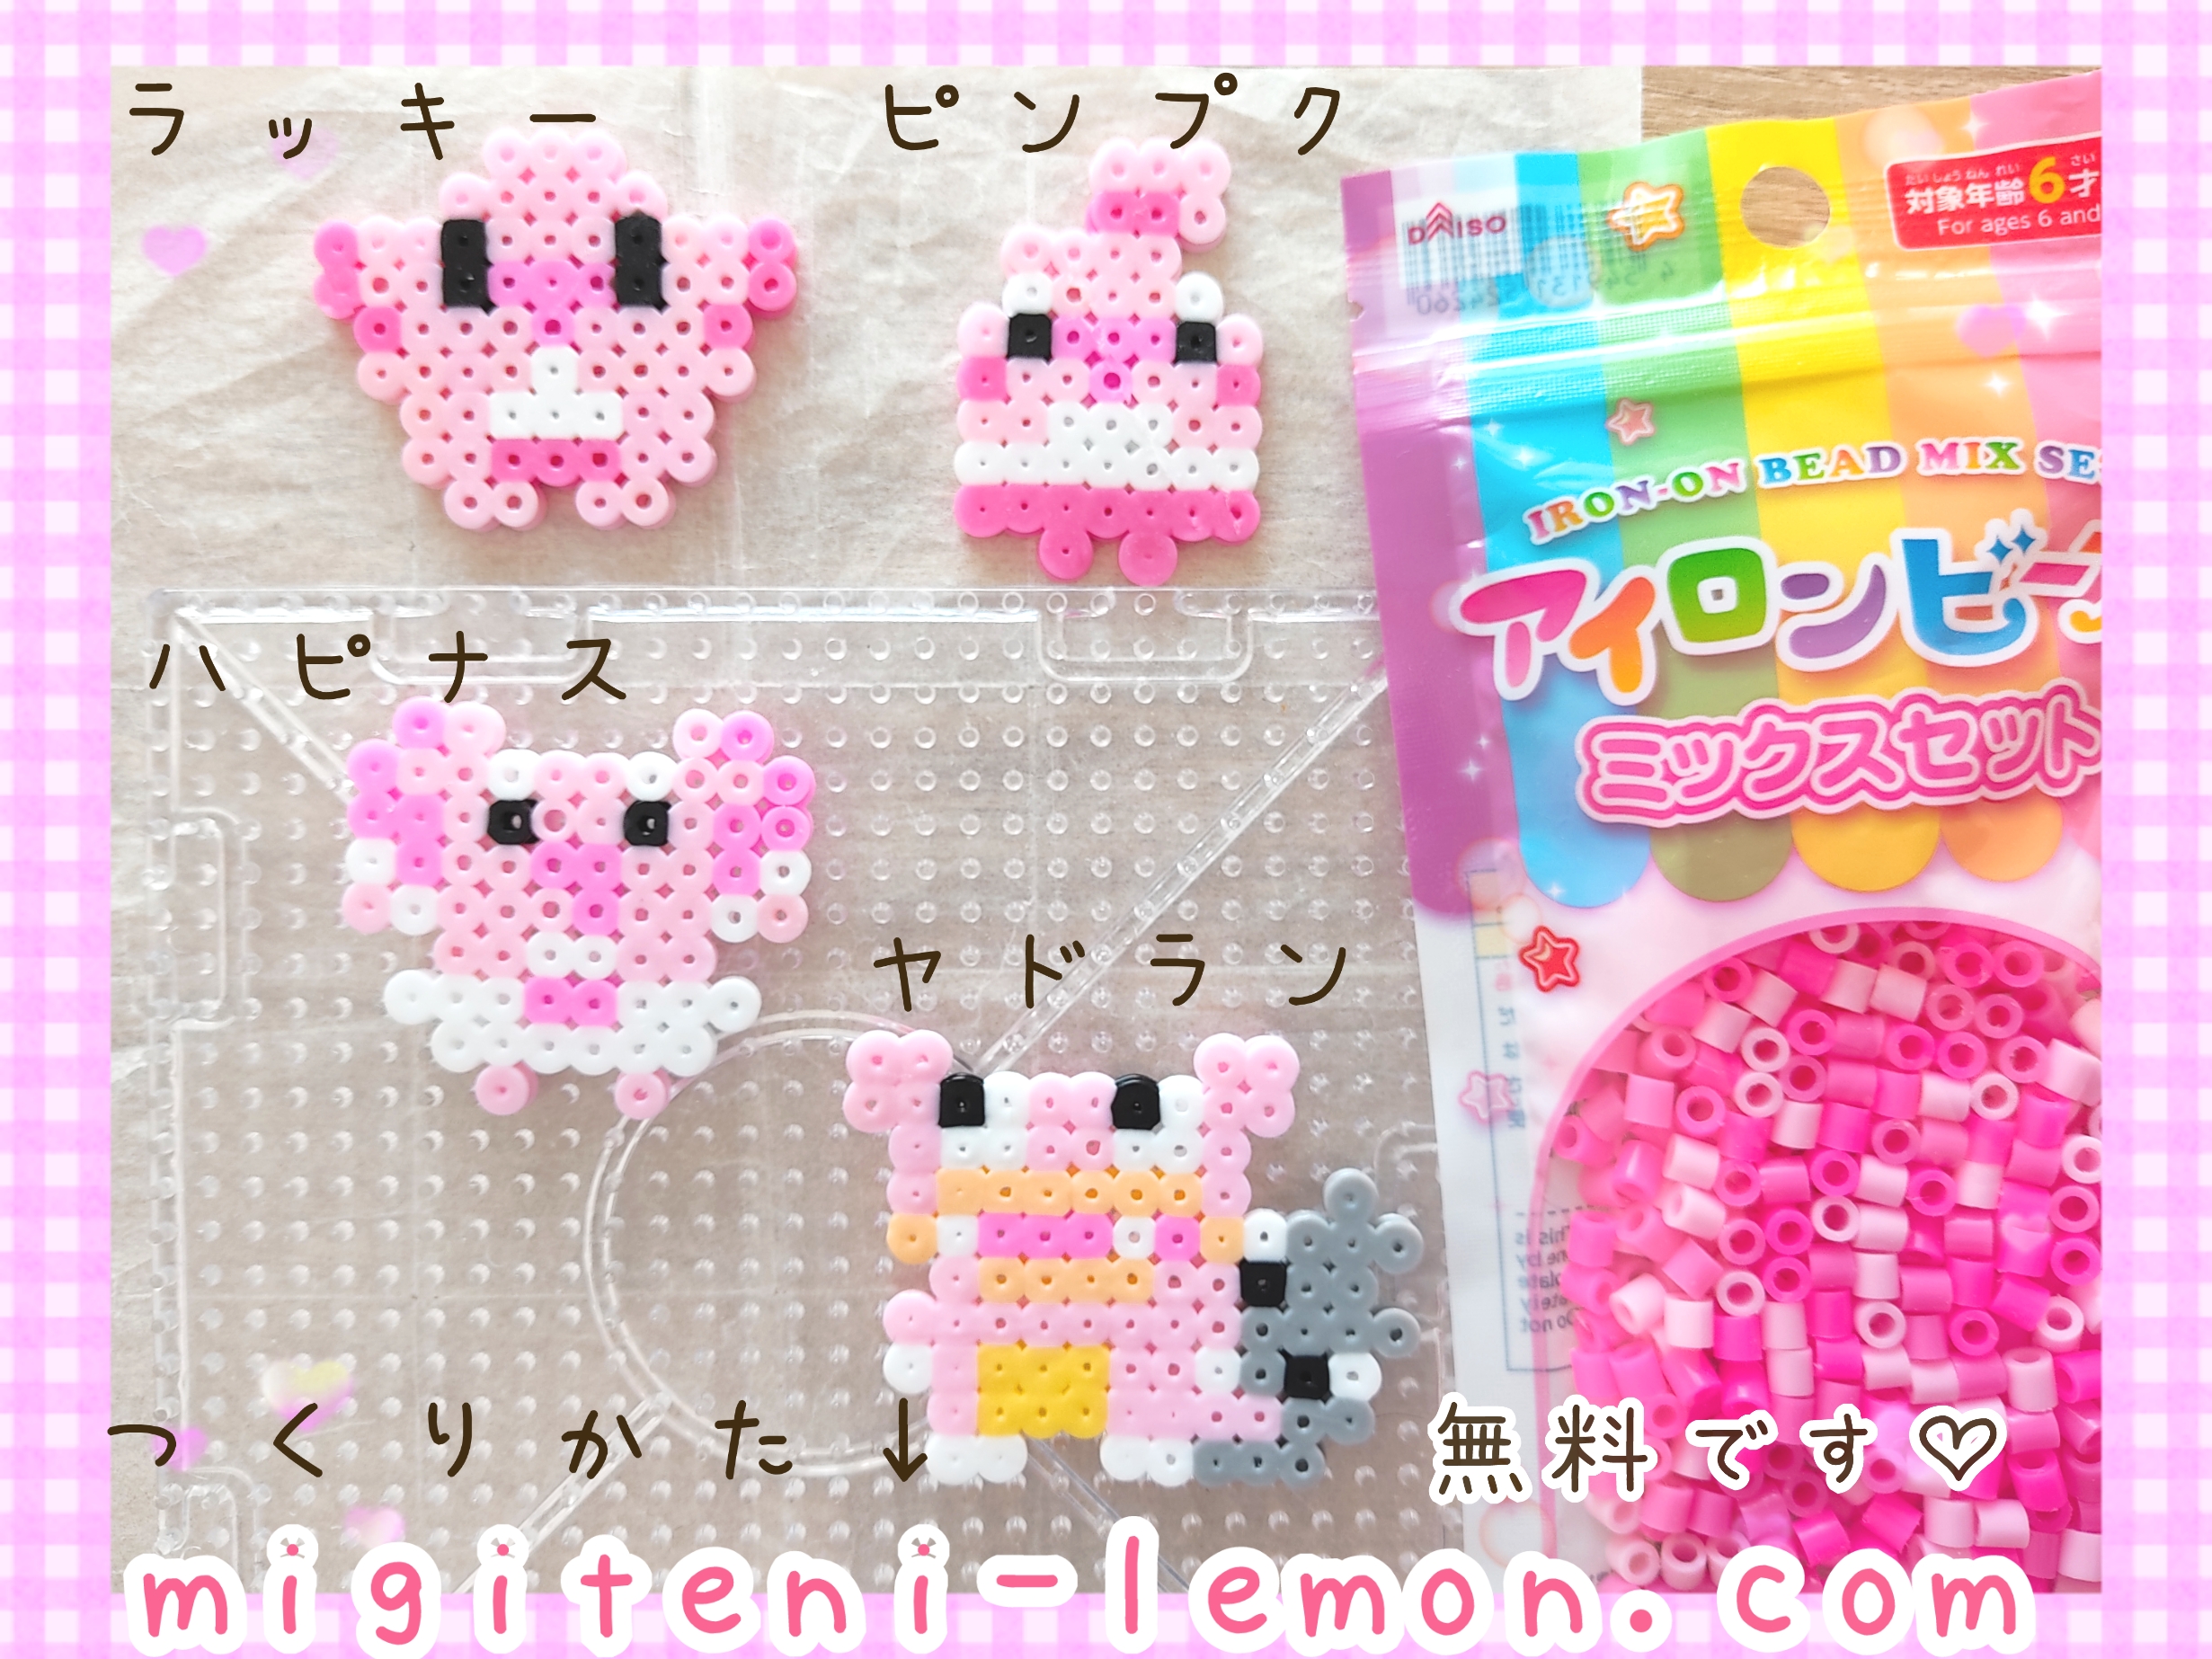 pink-hapinasu-blissey-yadoran-slowbro-pokemon-unite-handmade-iron-beads-free-zuan-daiso